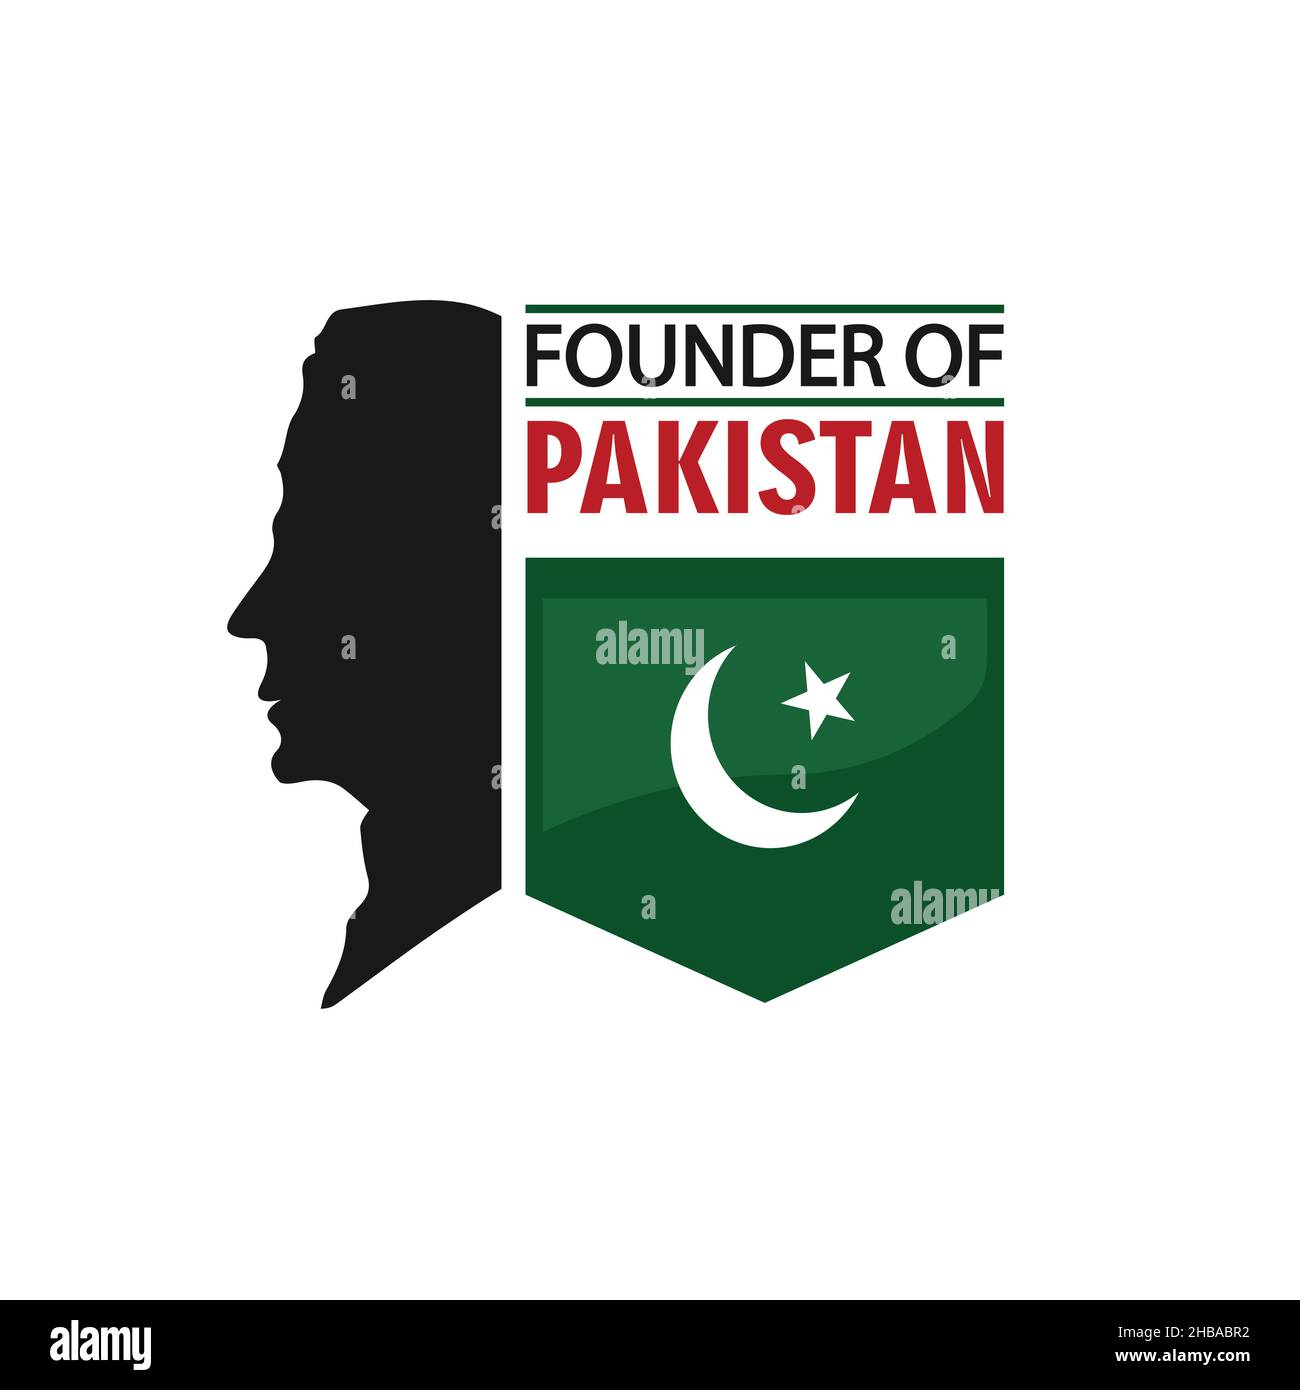 Quaid e Azam Day Celebration Poster Concept, 25 December, Flat Design with Pakistan flag Stock Vector